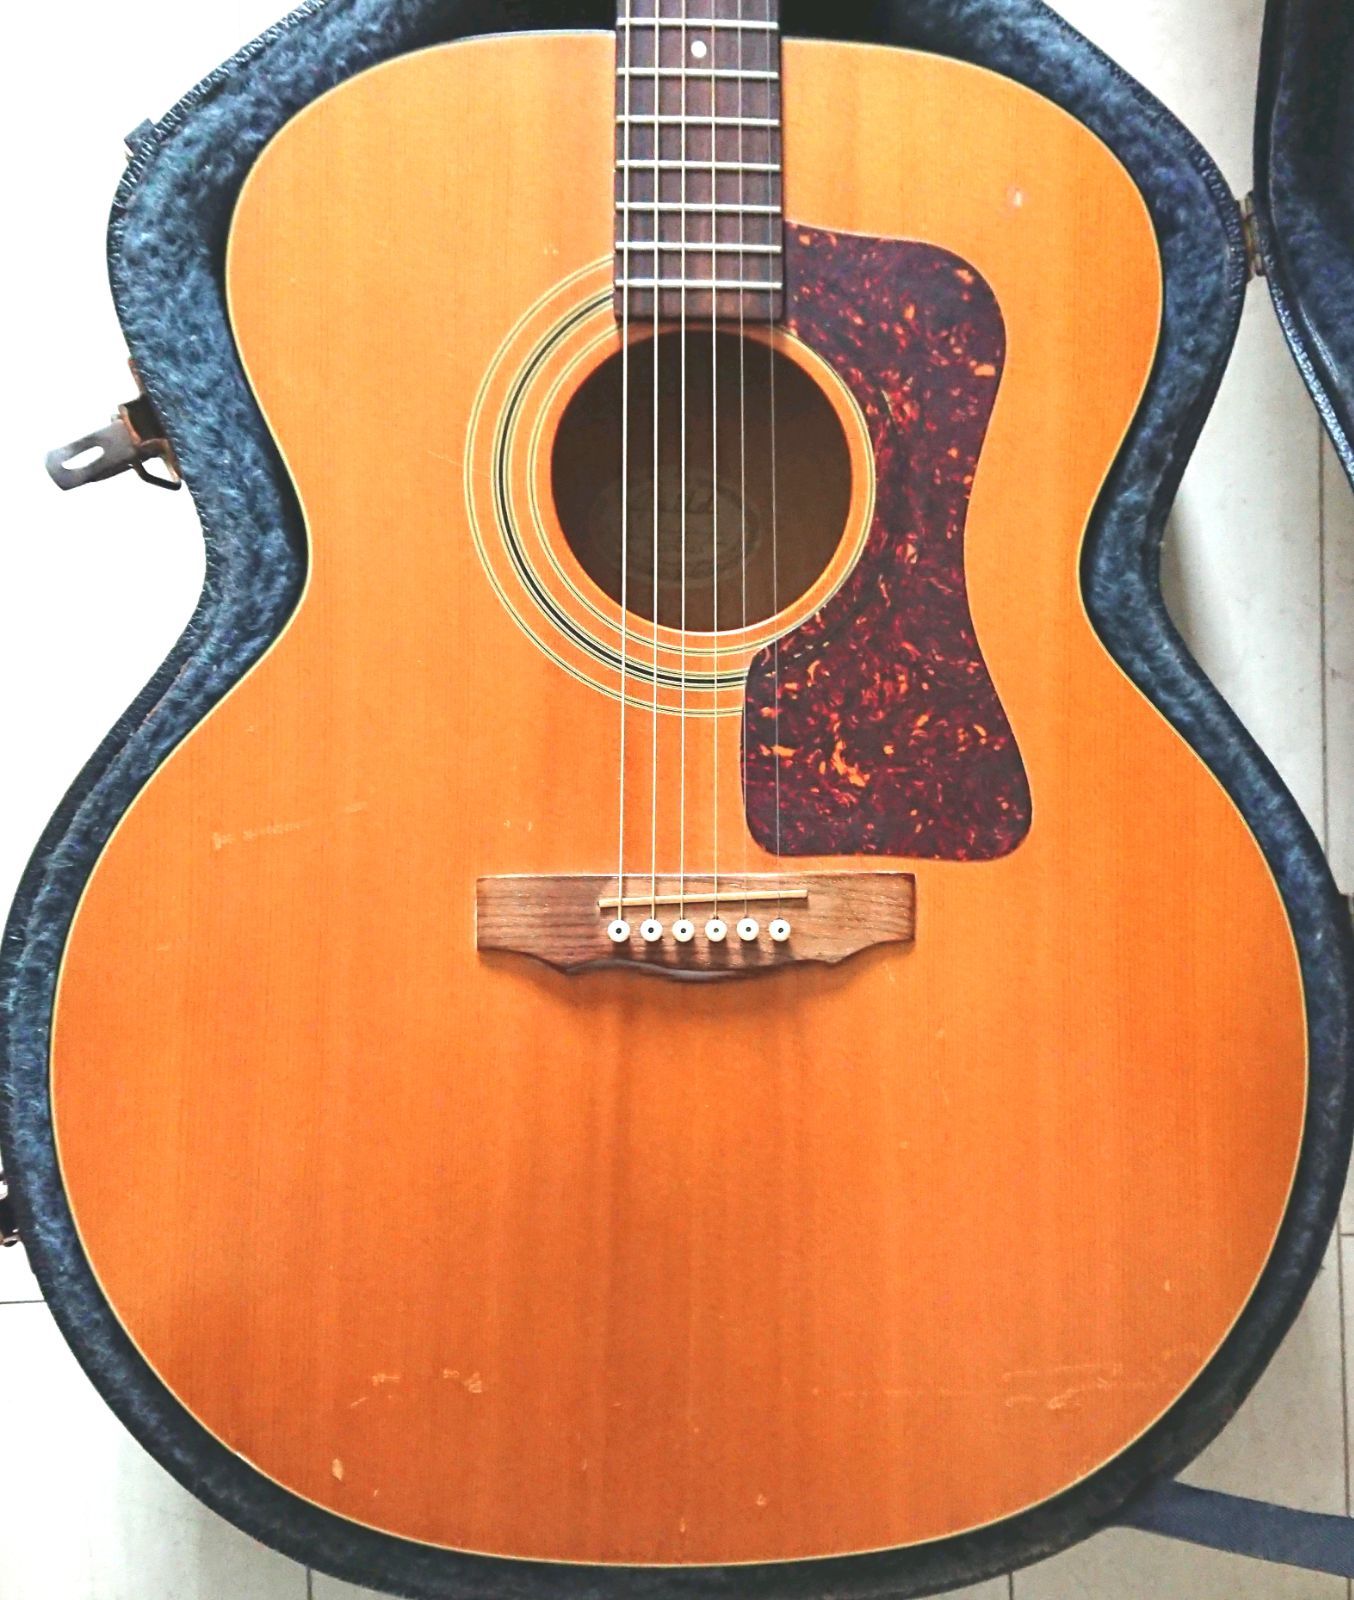 GUILD ギルド JF4 NAT 1993年製 ジャンボモデル アコースティックギター アーチバック Made in USA 代理店 山野楽器 黒色 オリジナル  ハードケース付き|mercariメルカリ官方指定廠商|Bibian比比昂代買代購